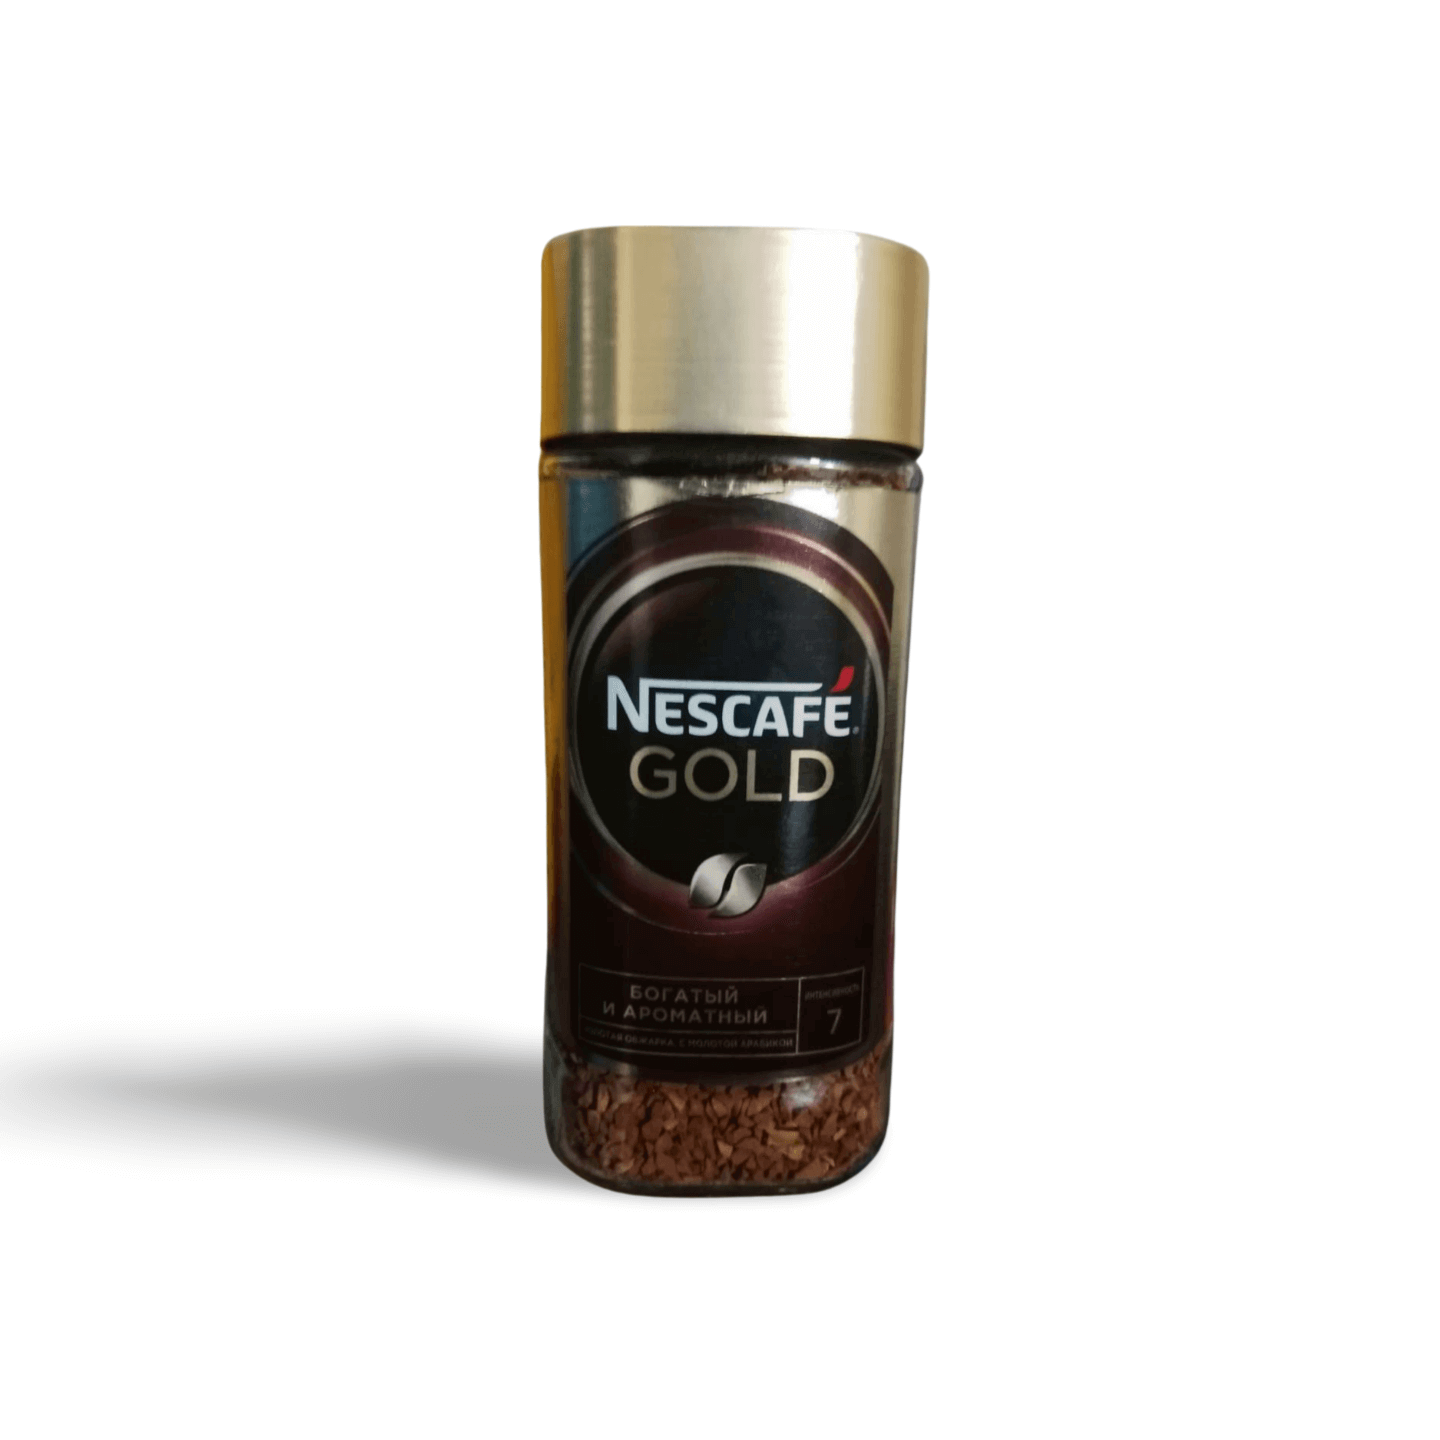 Nescafe Gold Coffee